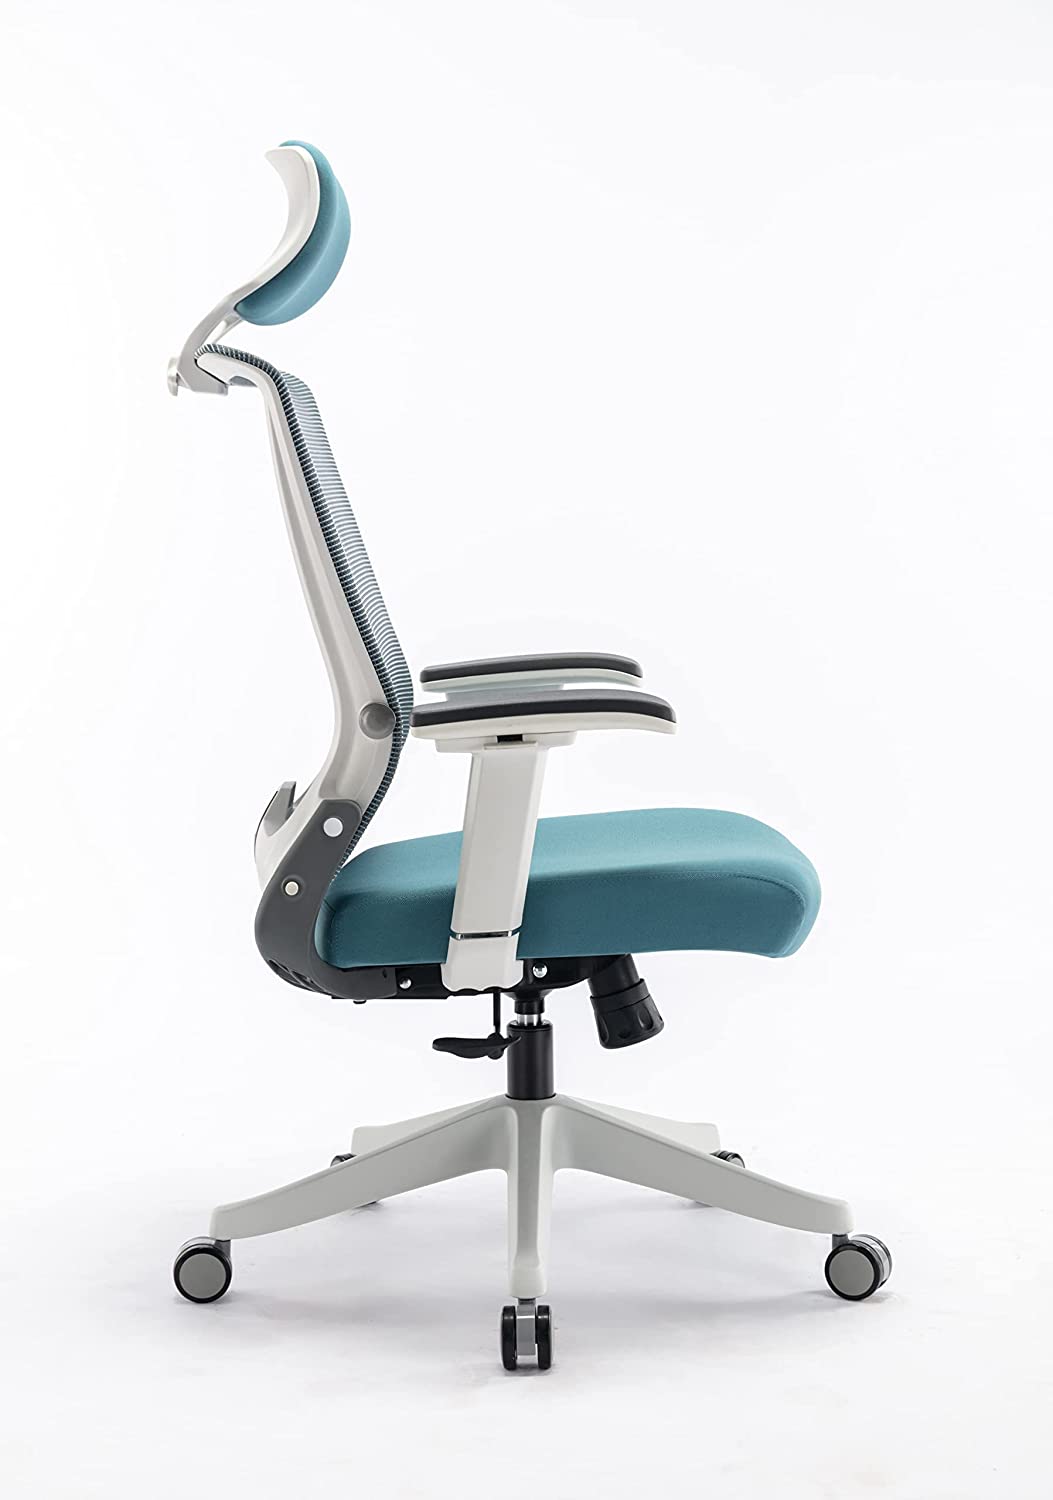 KIKO Chair, Ergonomic Folding Design, Premium Office & Computer Chair by Navodesk (MARINE BLUE)